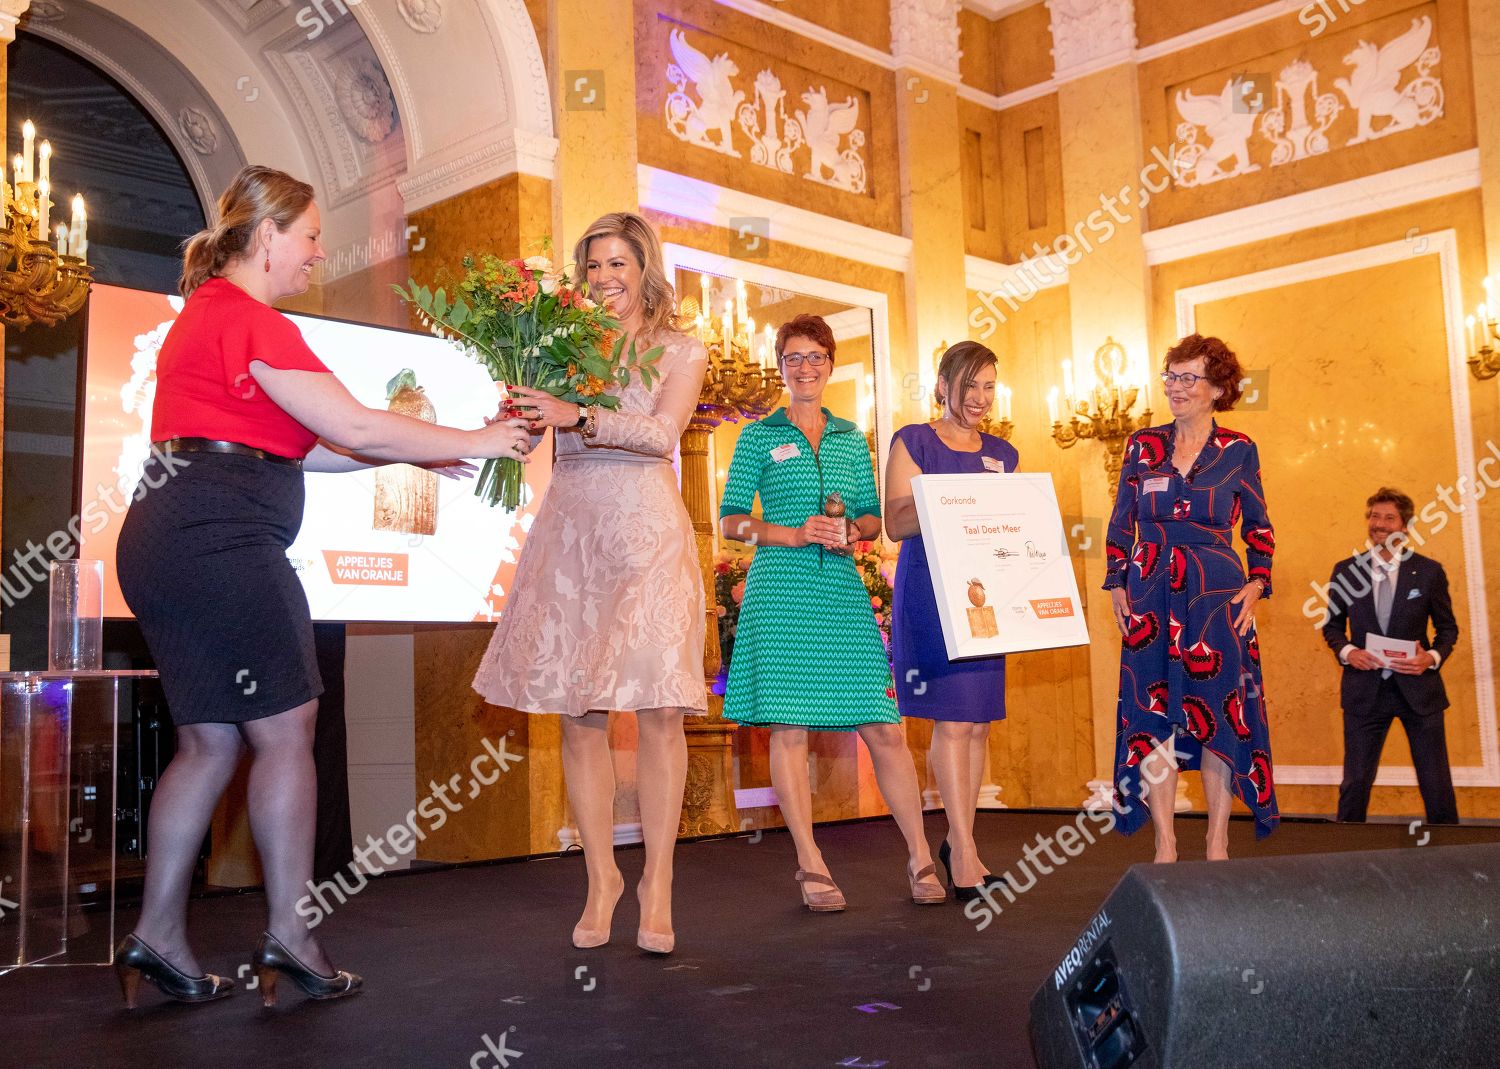 appeltjes-van-oranje-award-for-young-and-social-entrepreneurs-the-hague-netherlands-shutterstock-editorial-10245612p.jpg